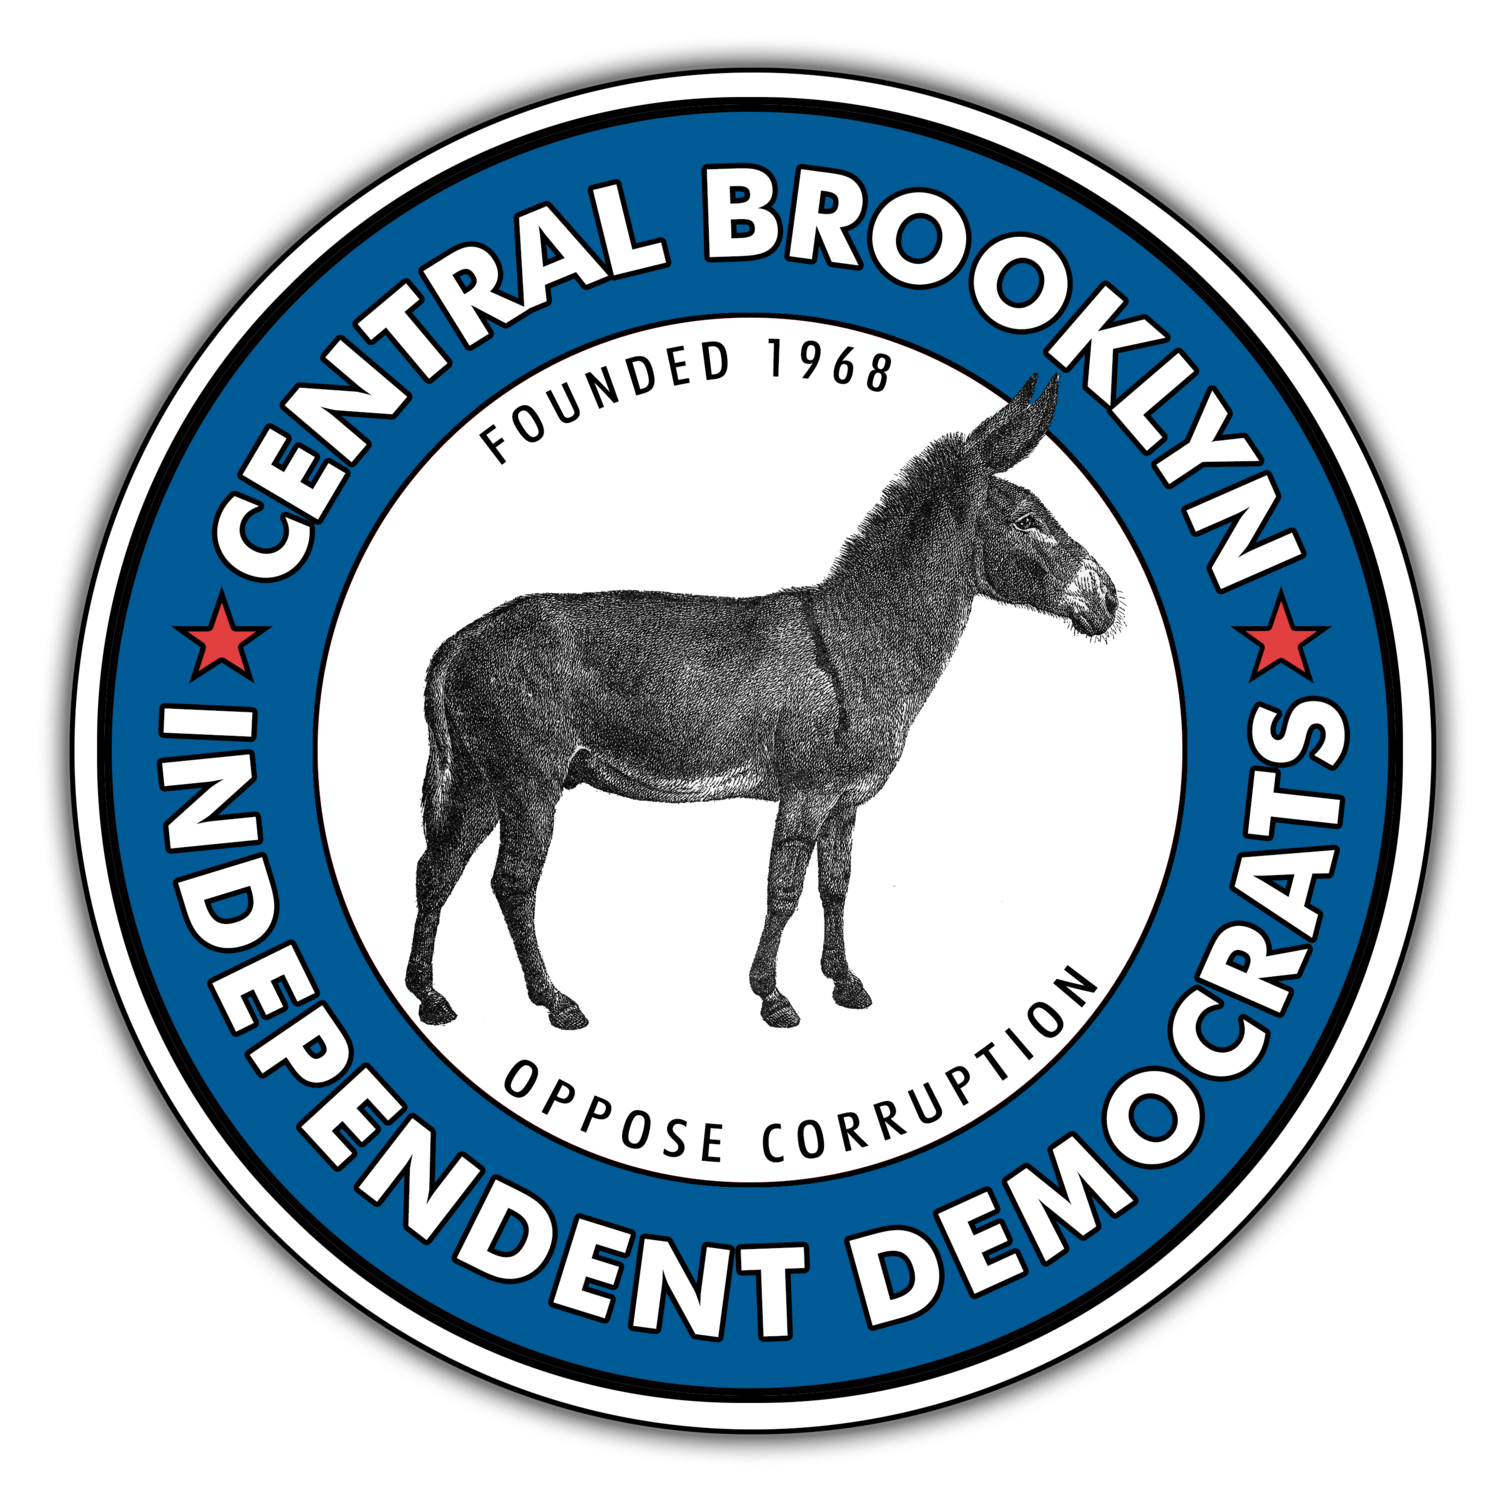 Central Brooklyn Independent Democrats